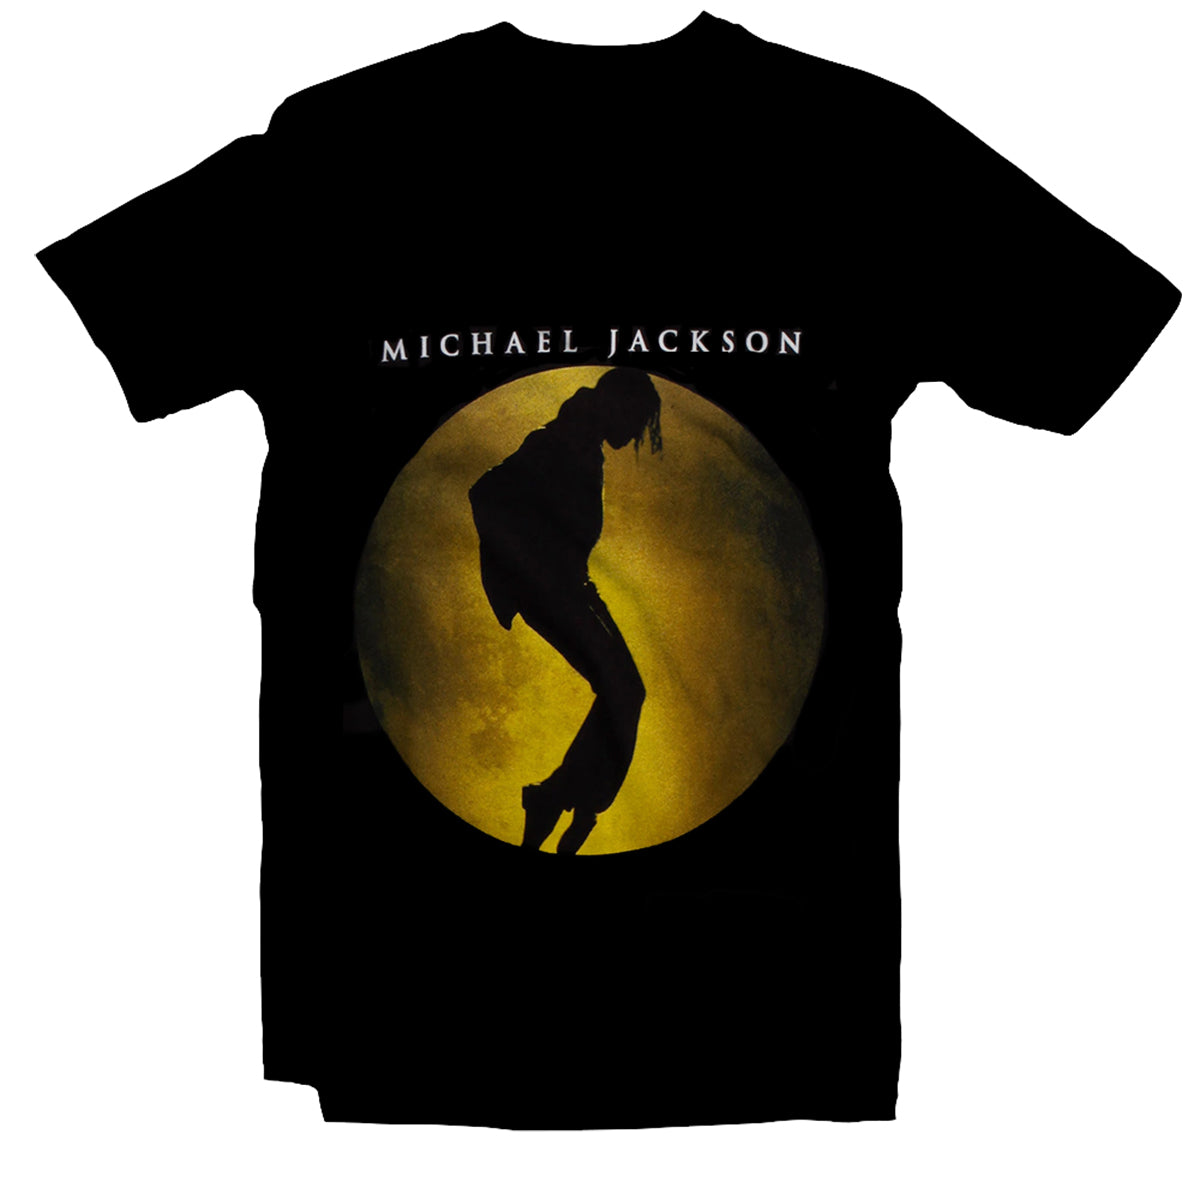 Michael Jackson Tip Toe T-Shirt